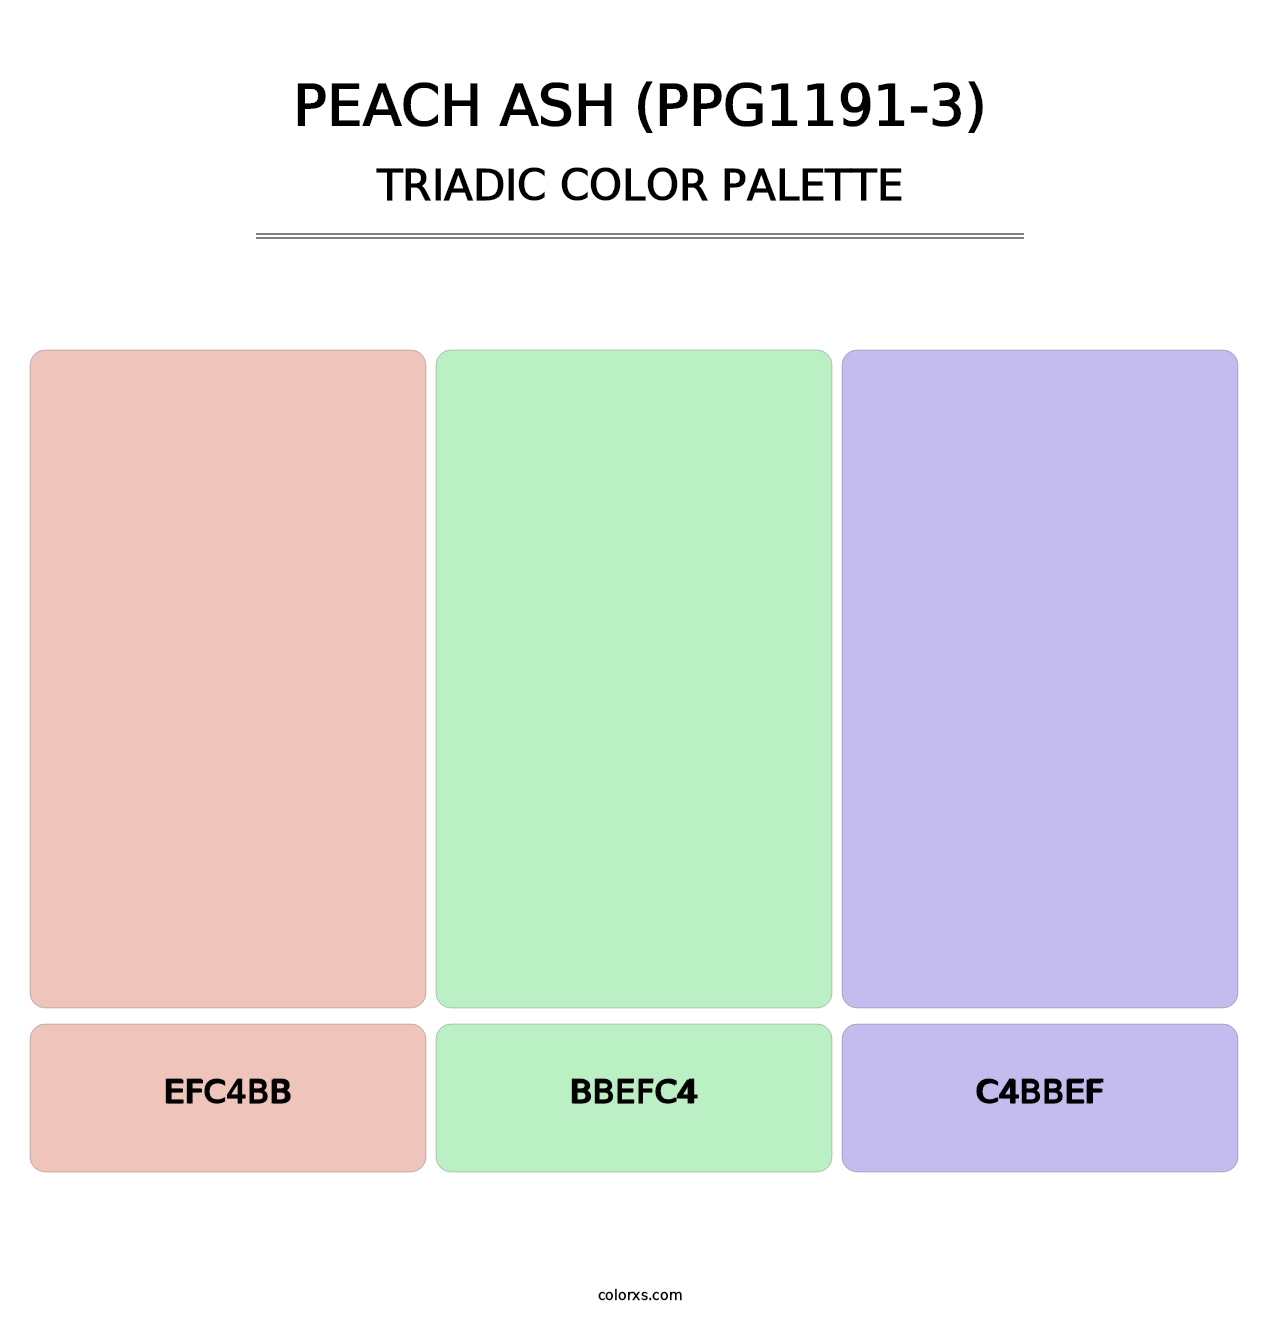 Peach Ash (PPG1191-3) - Triadic Color Palette